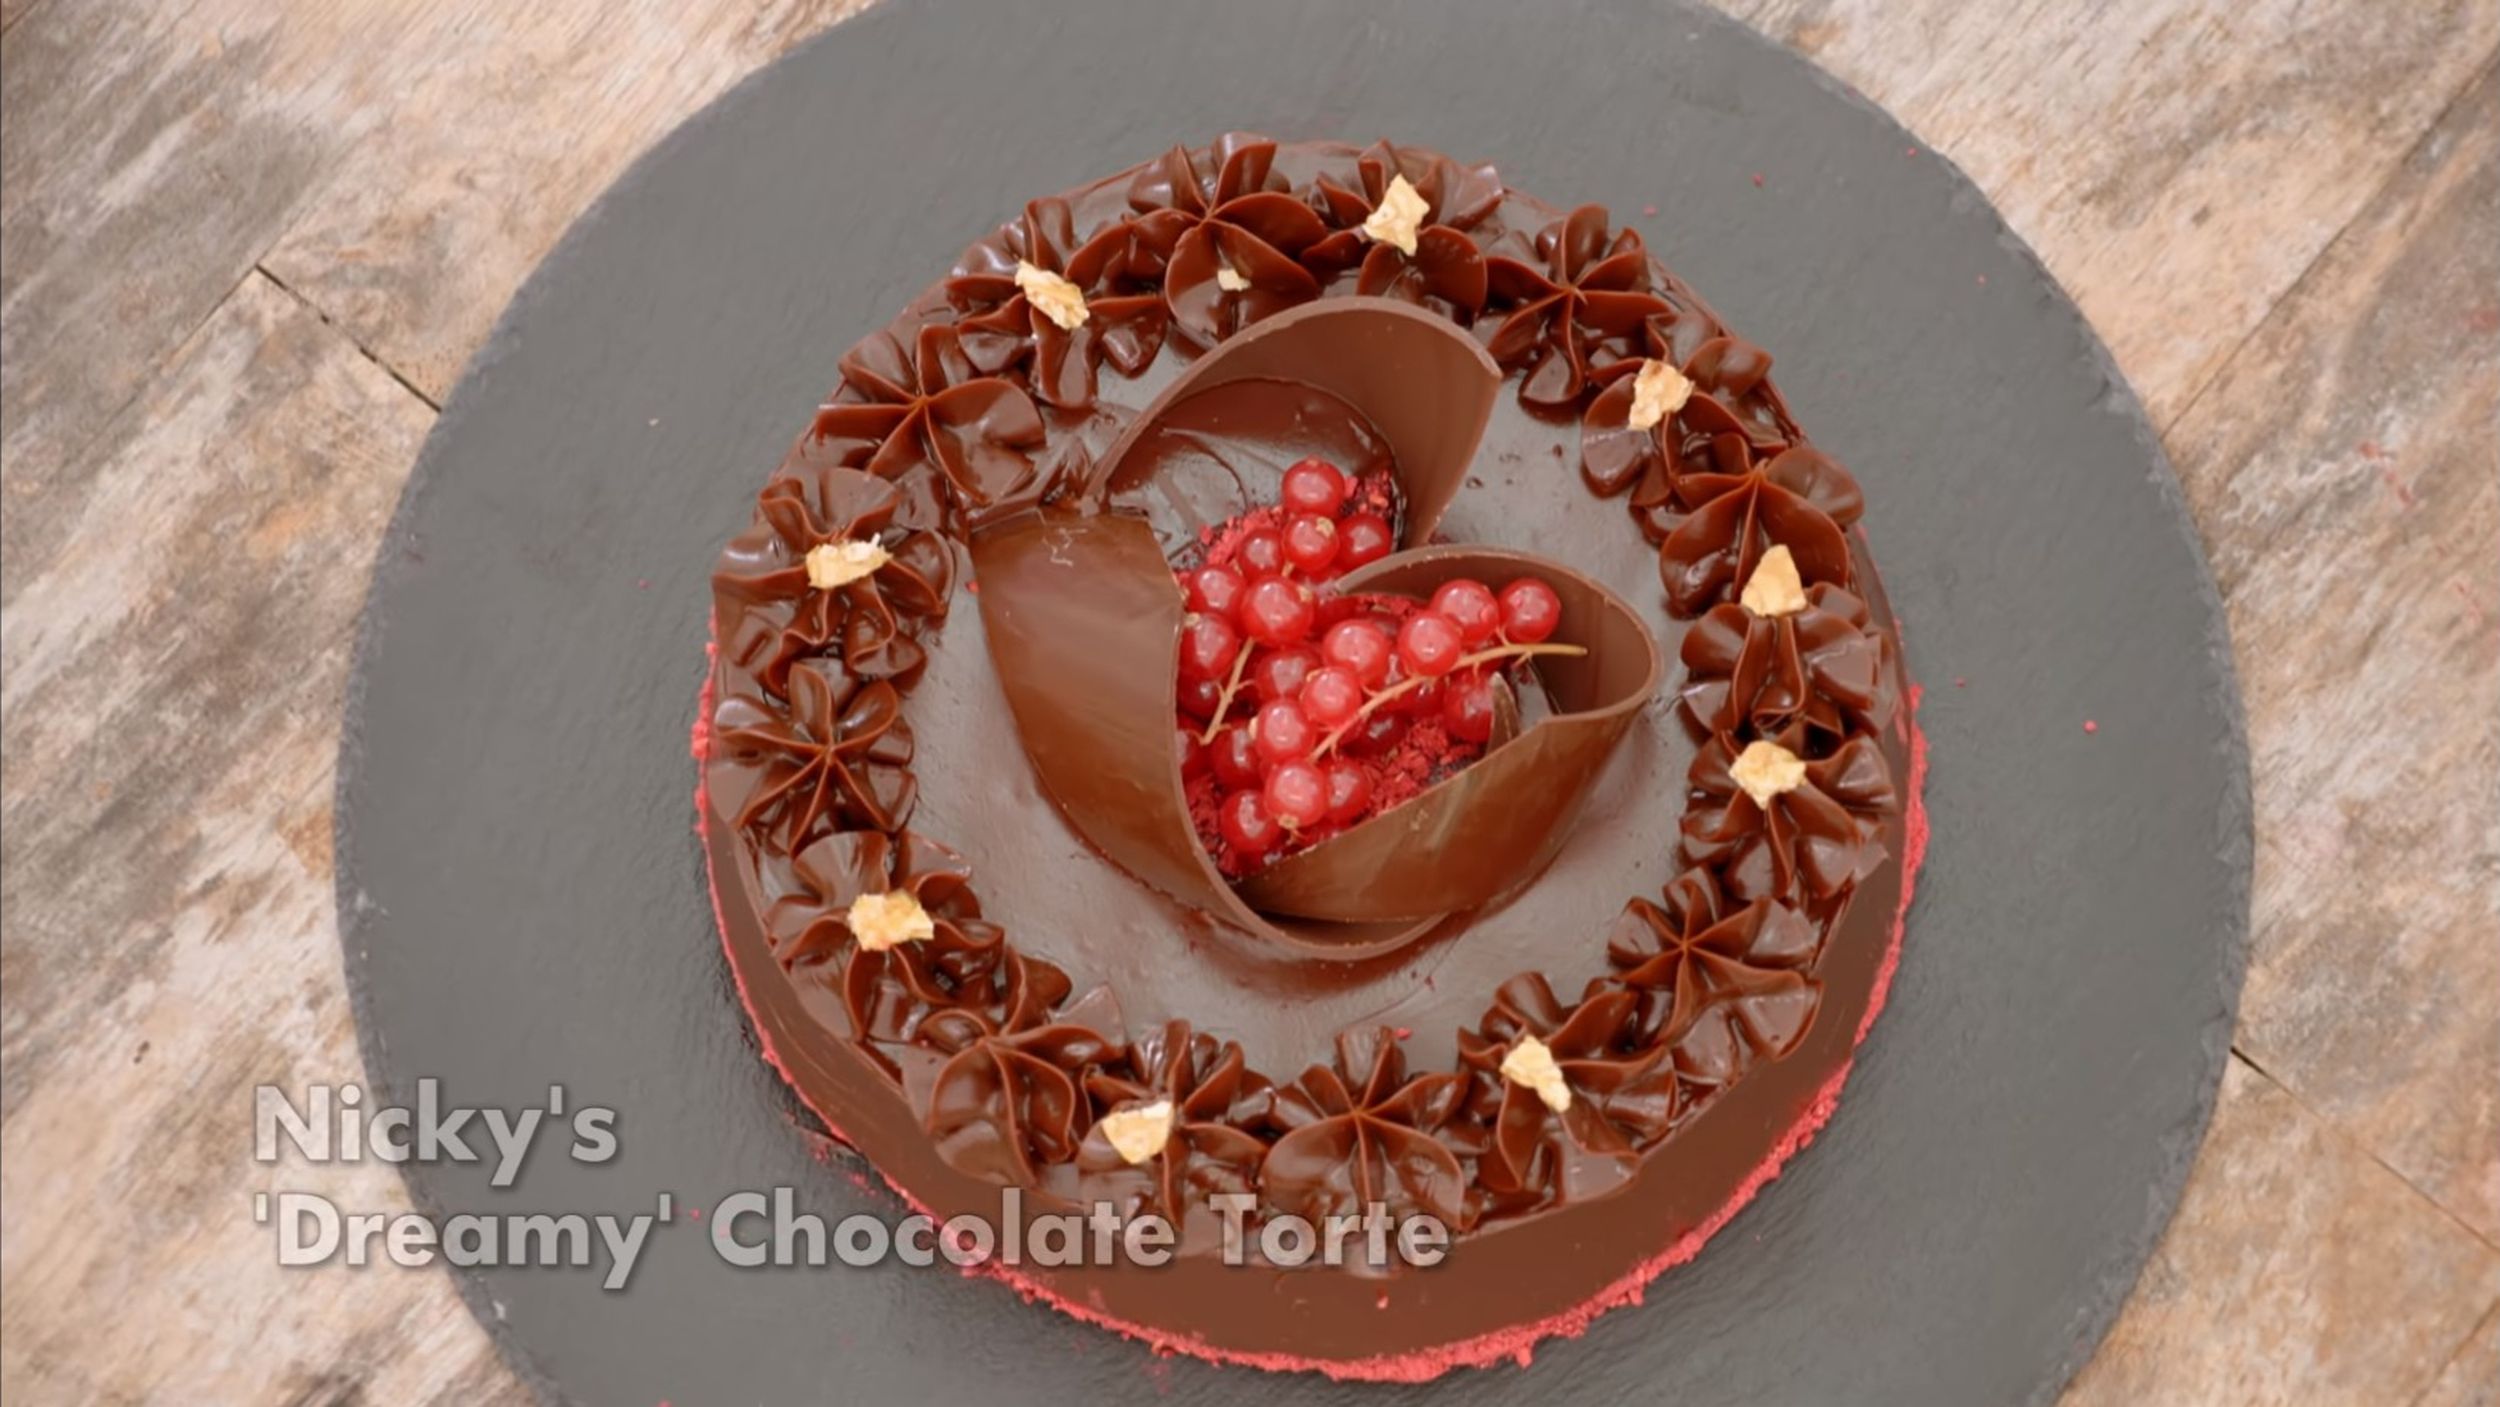 Nicky's Dreamy Chocolate Torte Signature from 'The Great British Baking Show' Season 14's Chocolate Week